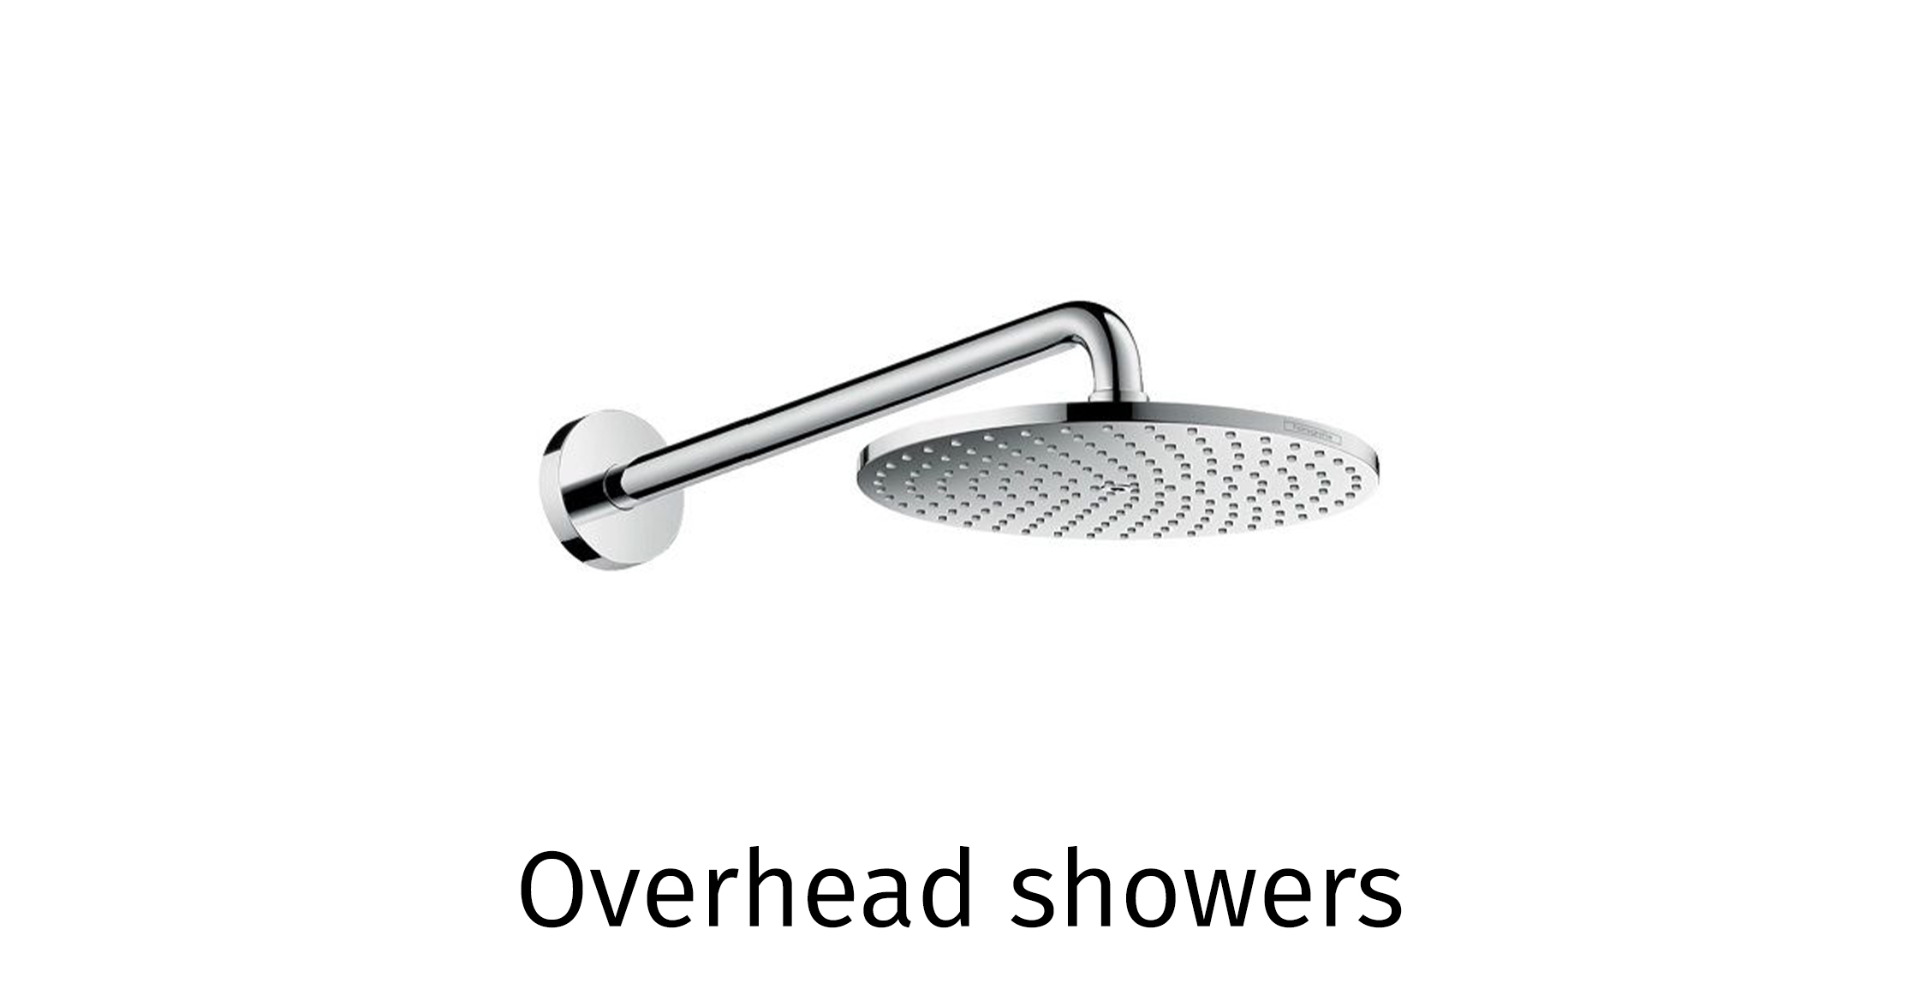 Overhead showers